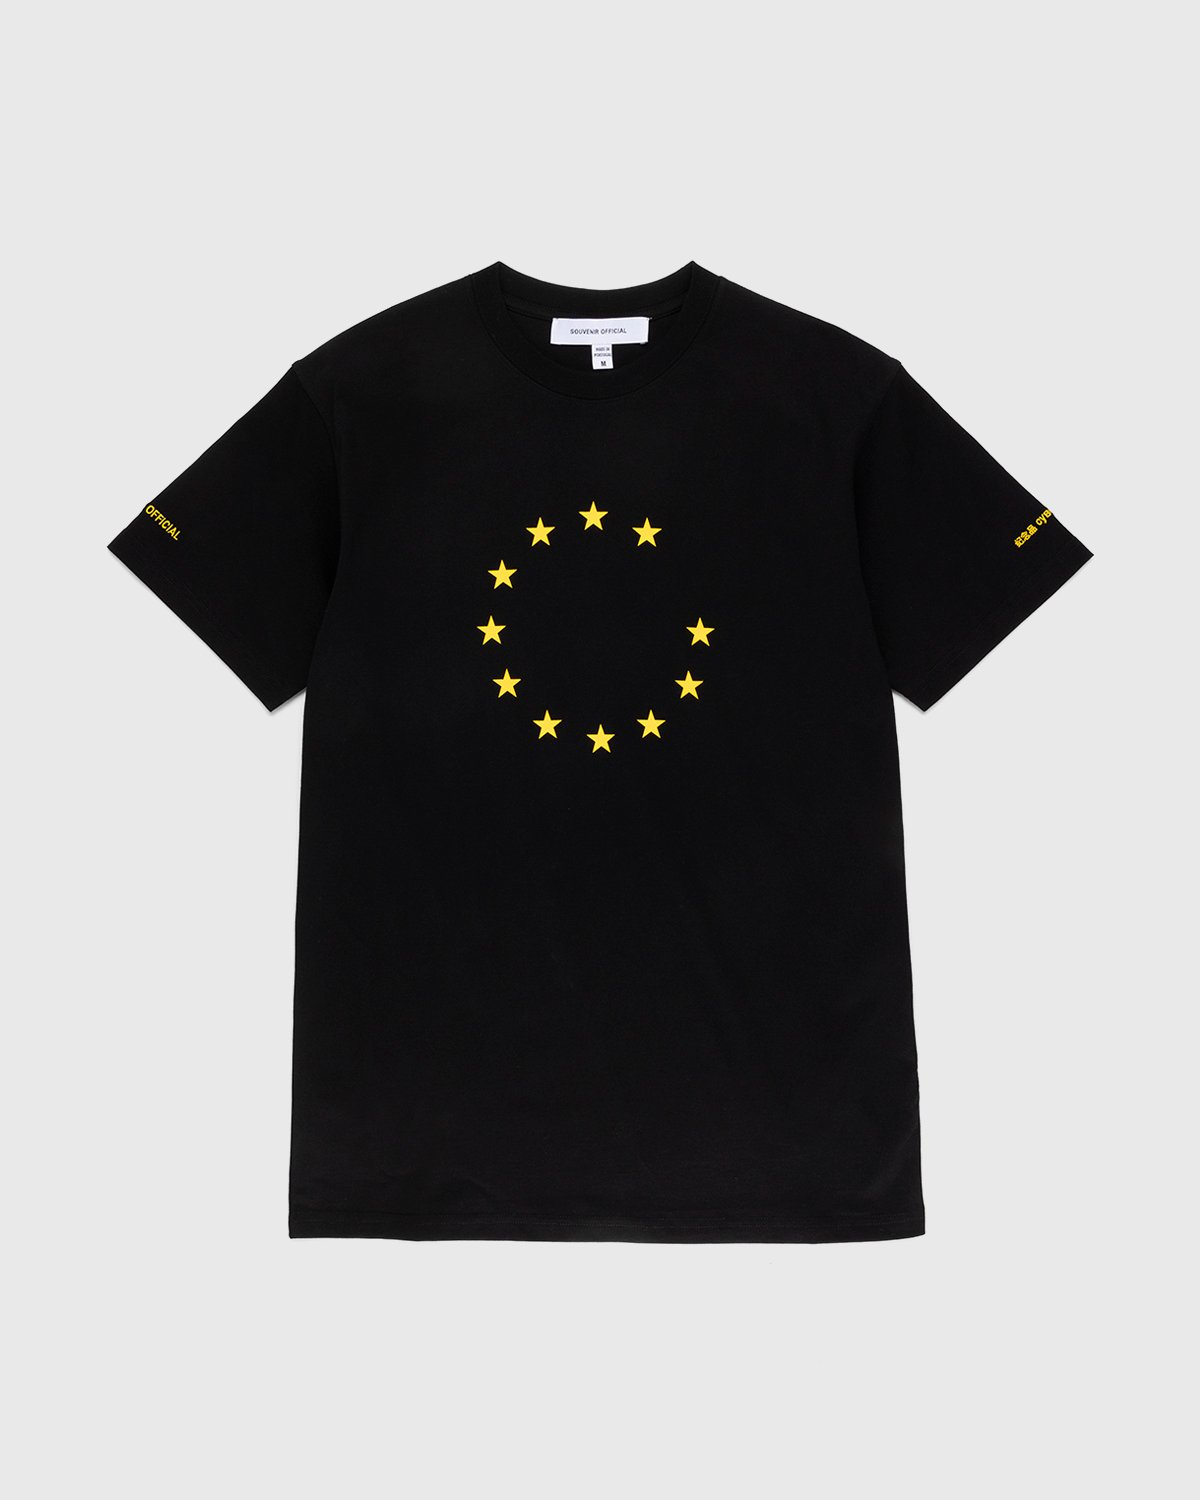 Souvenir - Eunify Classic T-Shirt Black - Clothing - Black - Image 1